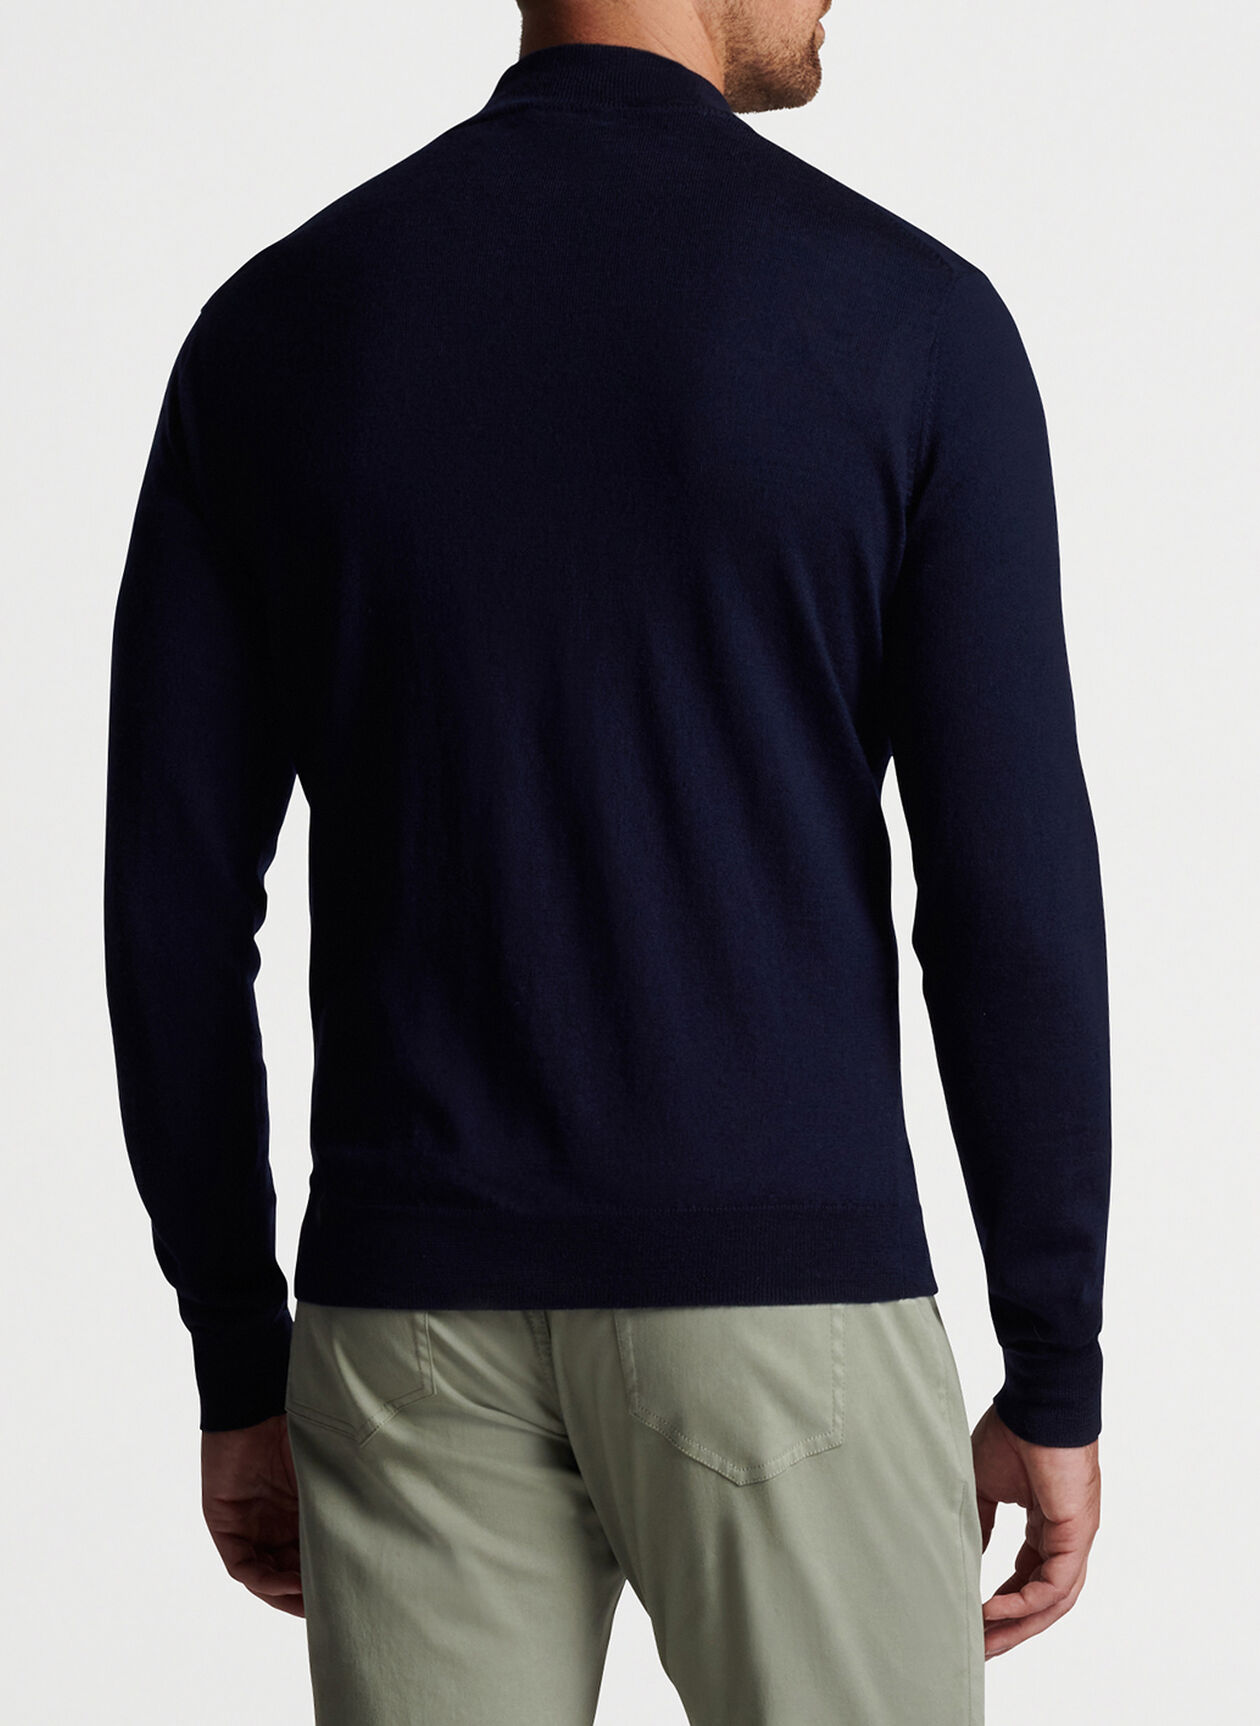 Autumn Crest Quarter-Zip | Men's Sweaters | Peter Millar